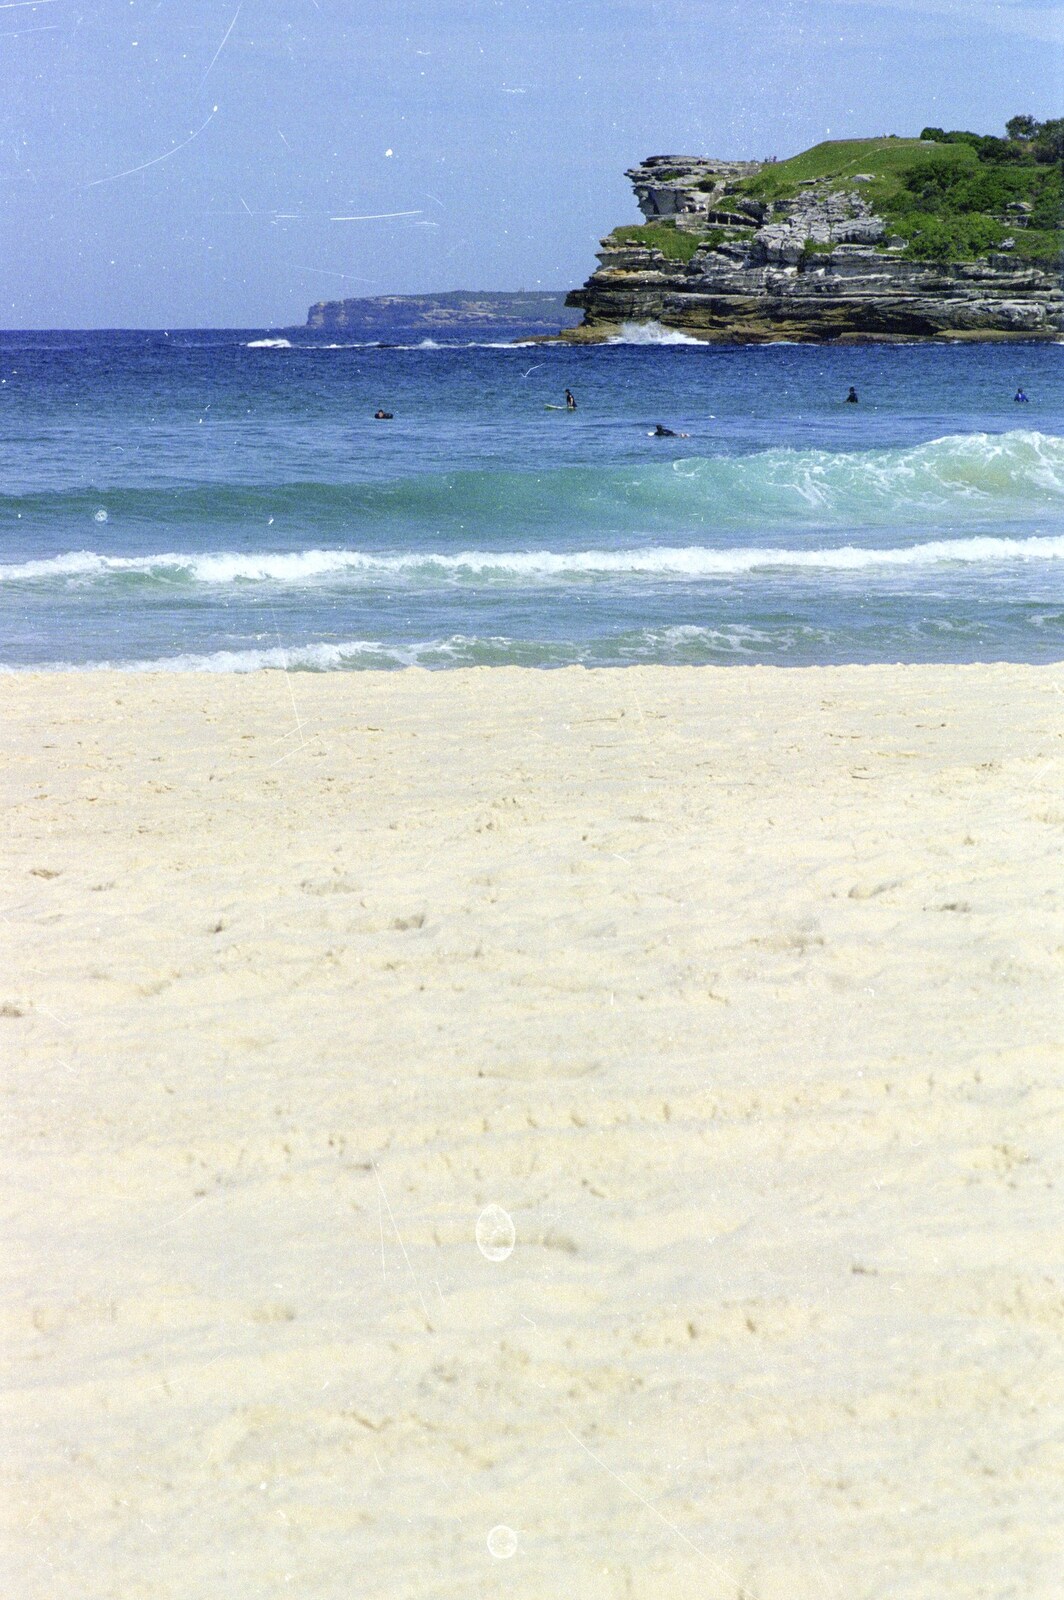 The pale gold sands of Bondi from Sydney Triathlon, Sydney, Australia - 16th April 2000